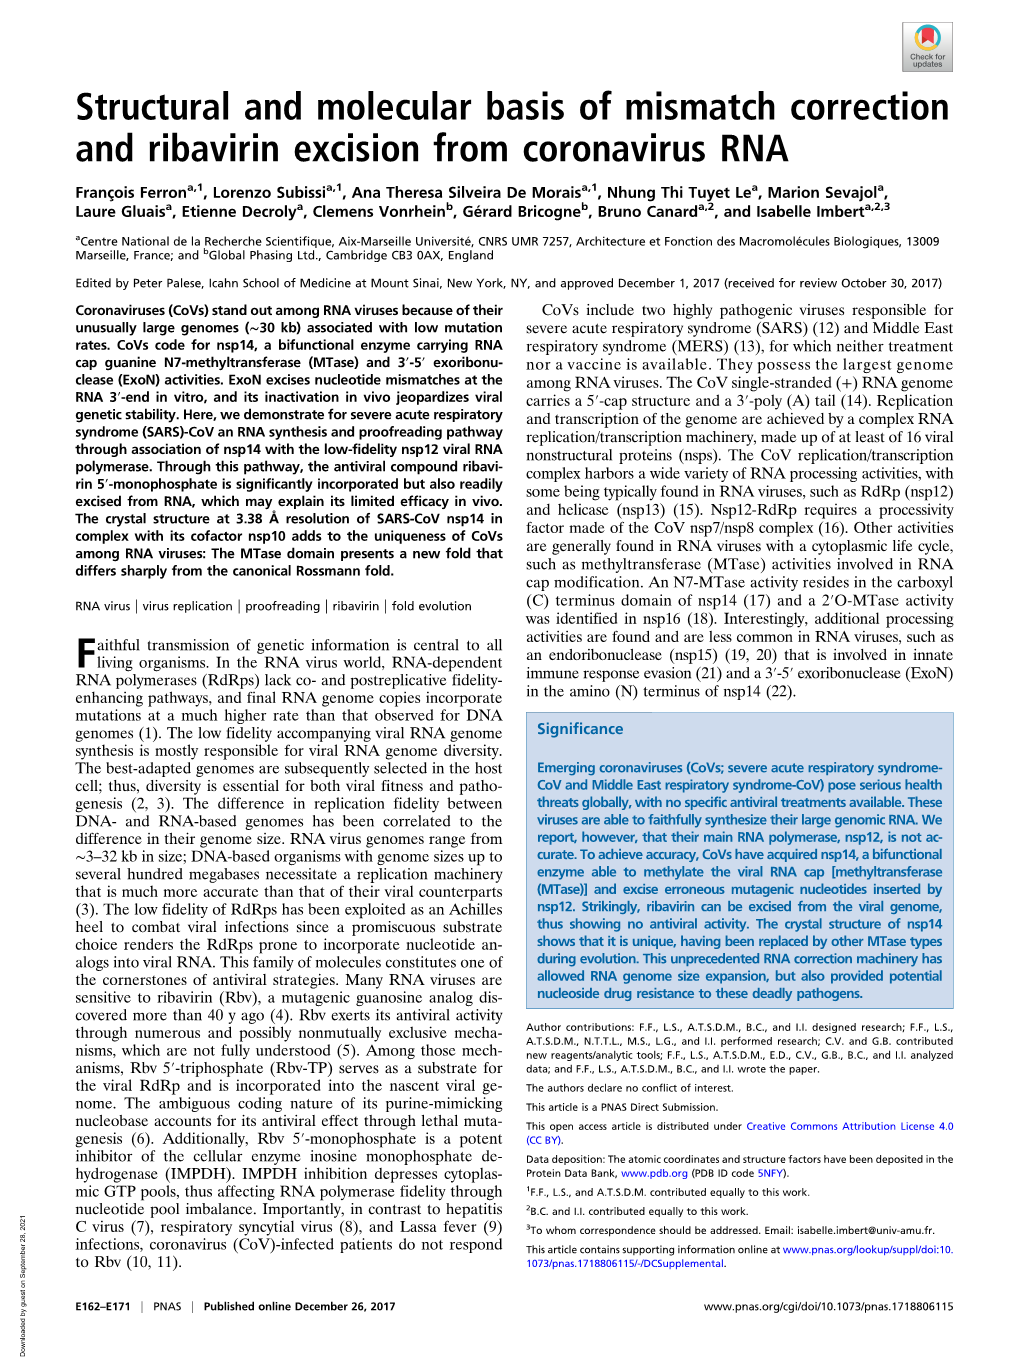 Structural and Molecular Basis of Mismatch Correction and Ribavirin Excision from Coronavirus RNA